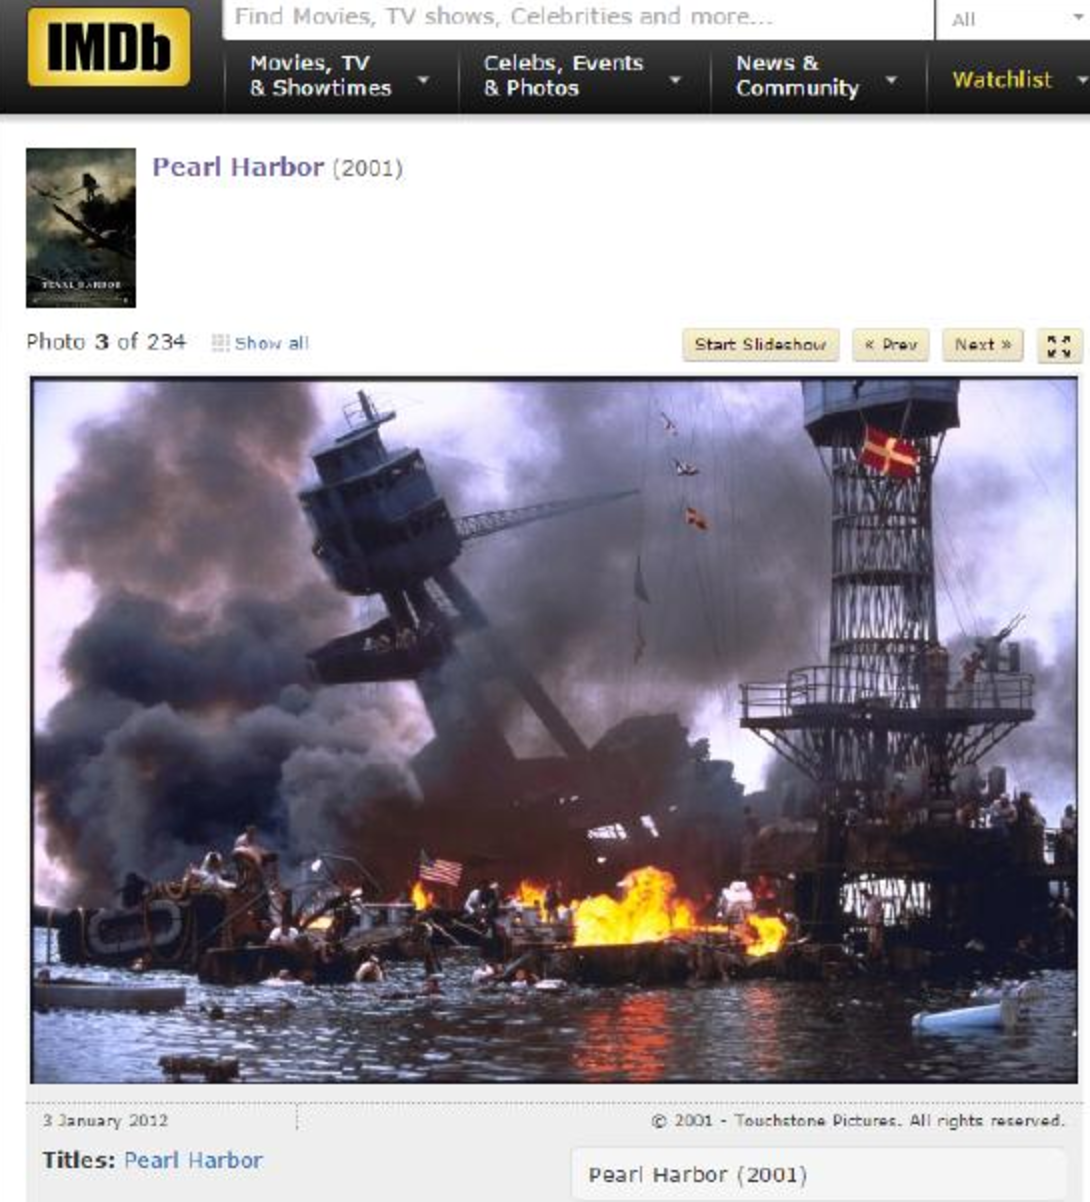 Pearl Harbor IMDb page